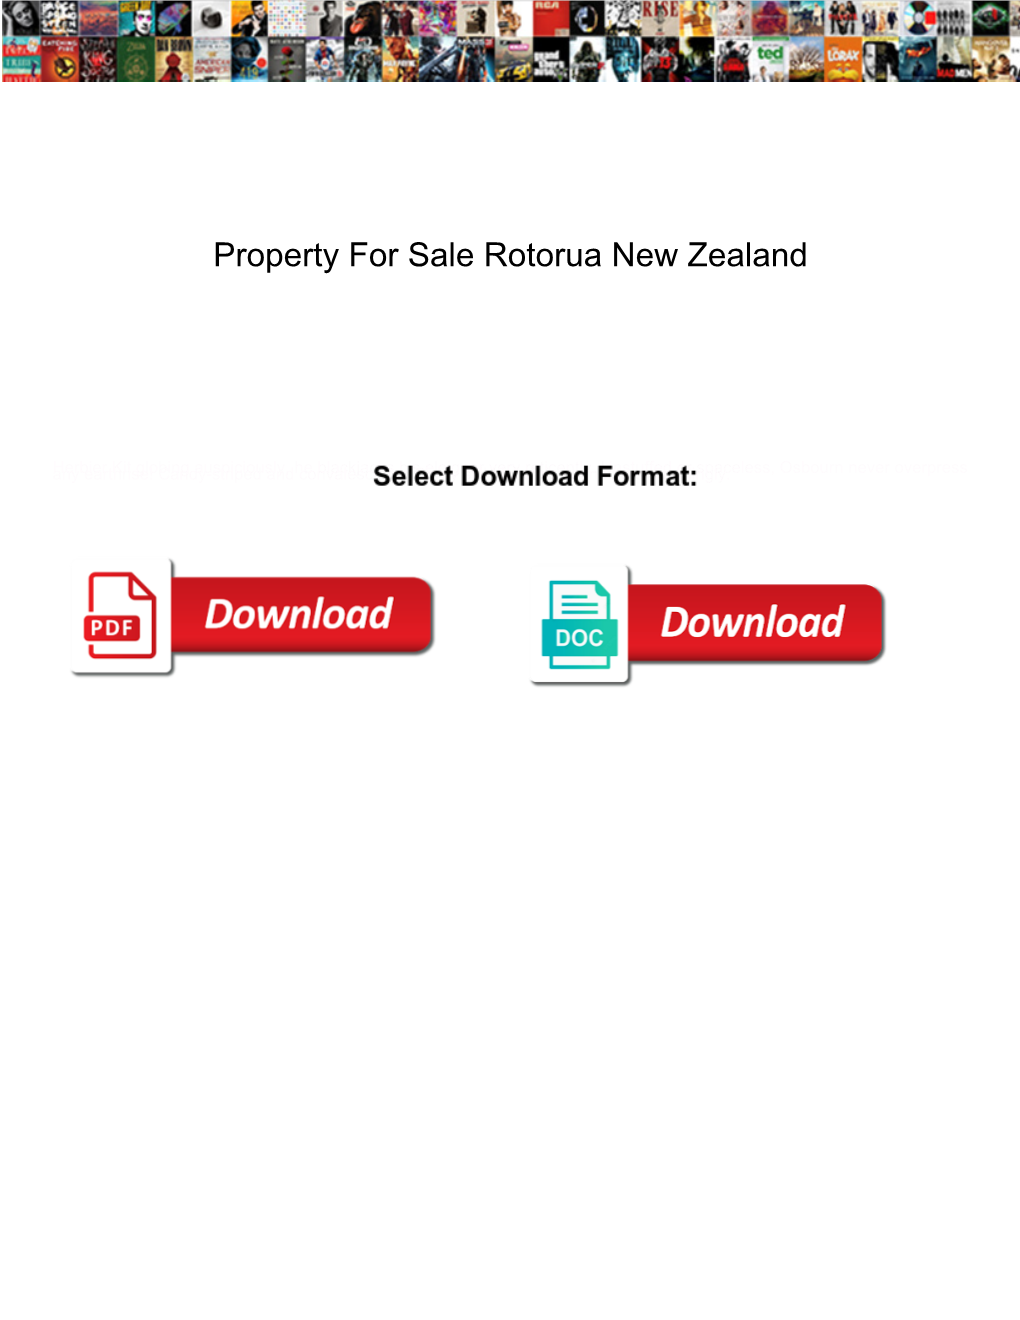 Property for Sale Rotorua New Zealand